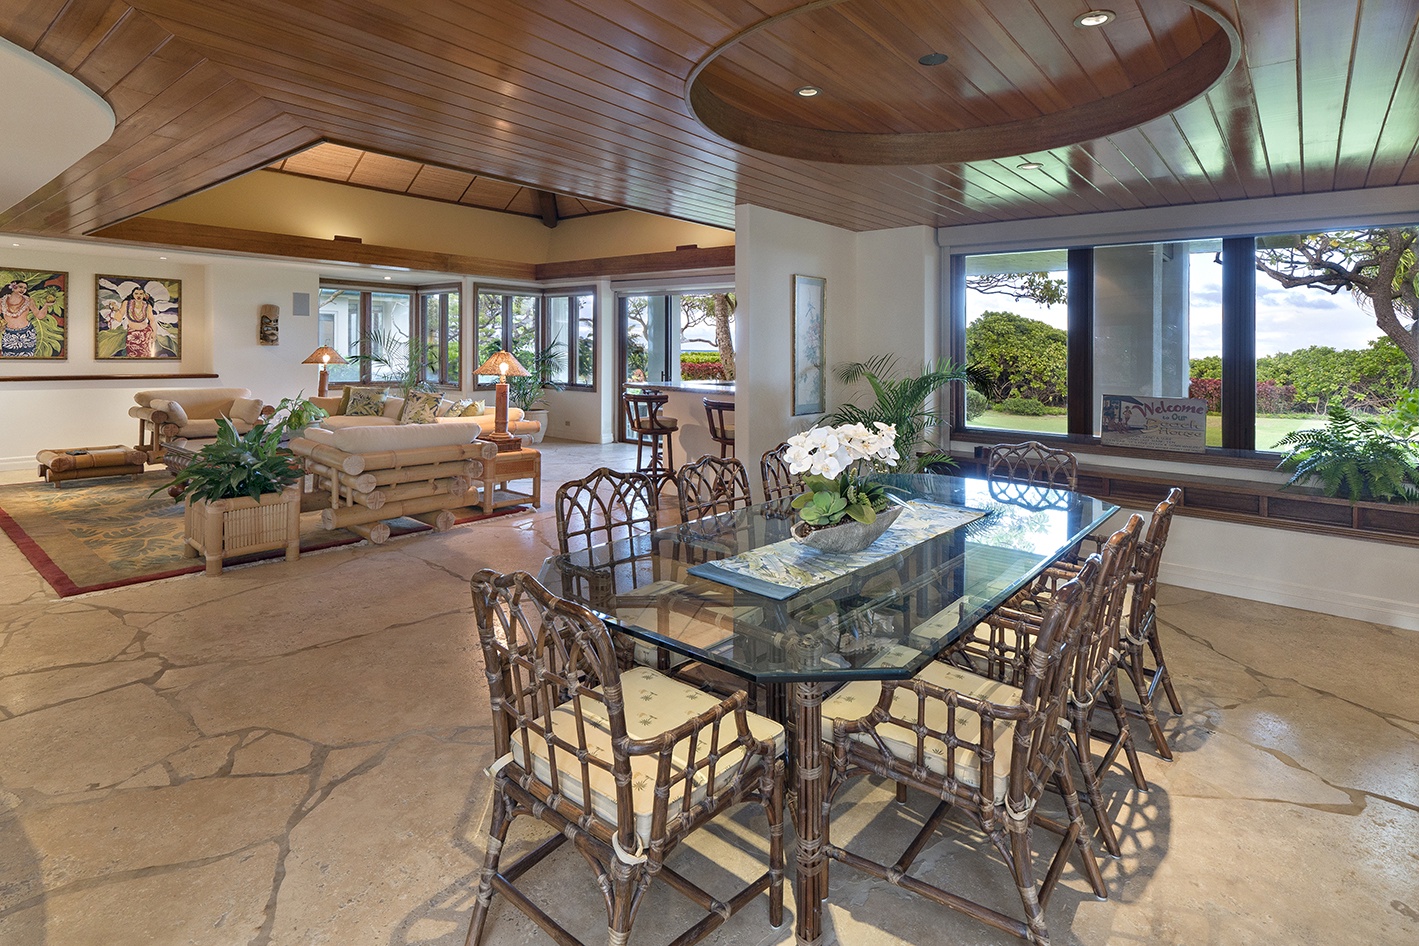 Kailua Vacation Rentals, Kailua's Kai Moena Estate - Guest house: Dining room seats 8.